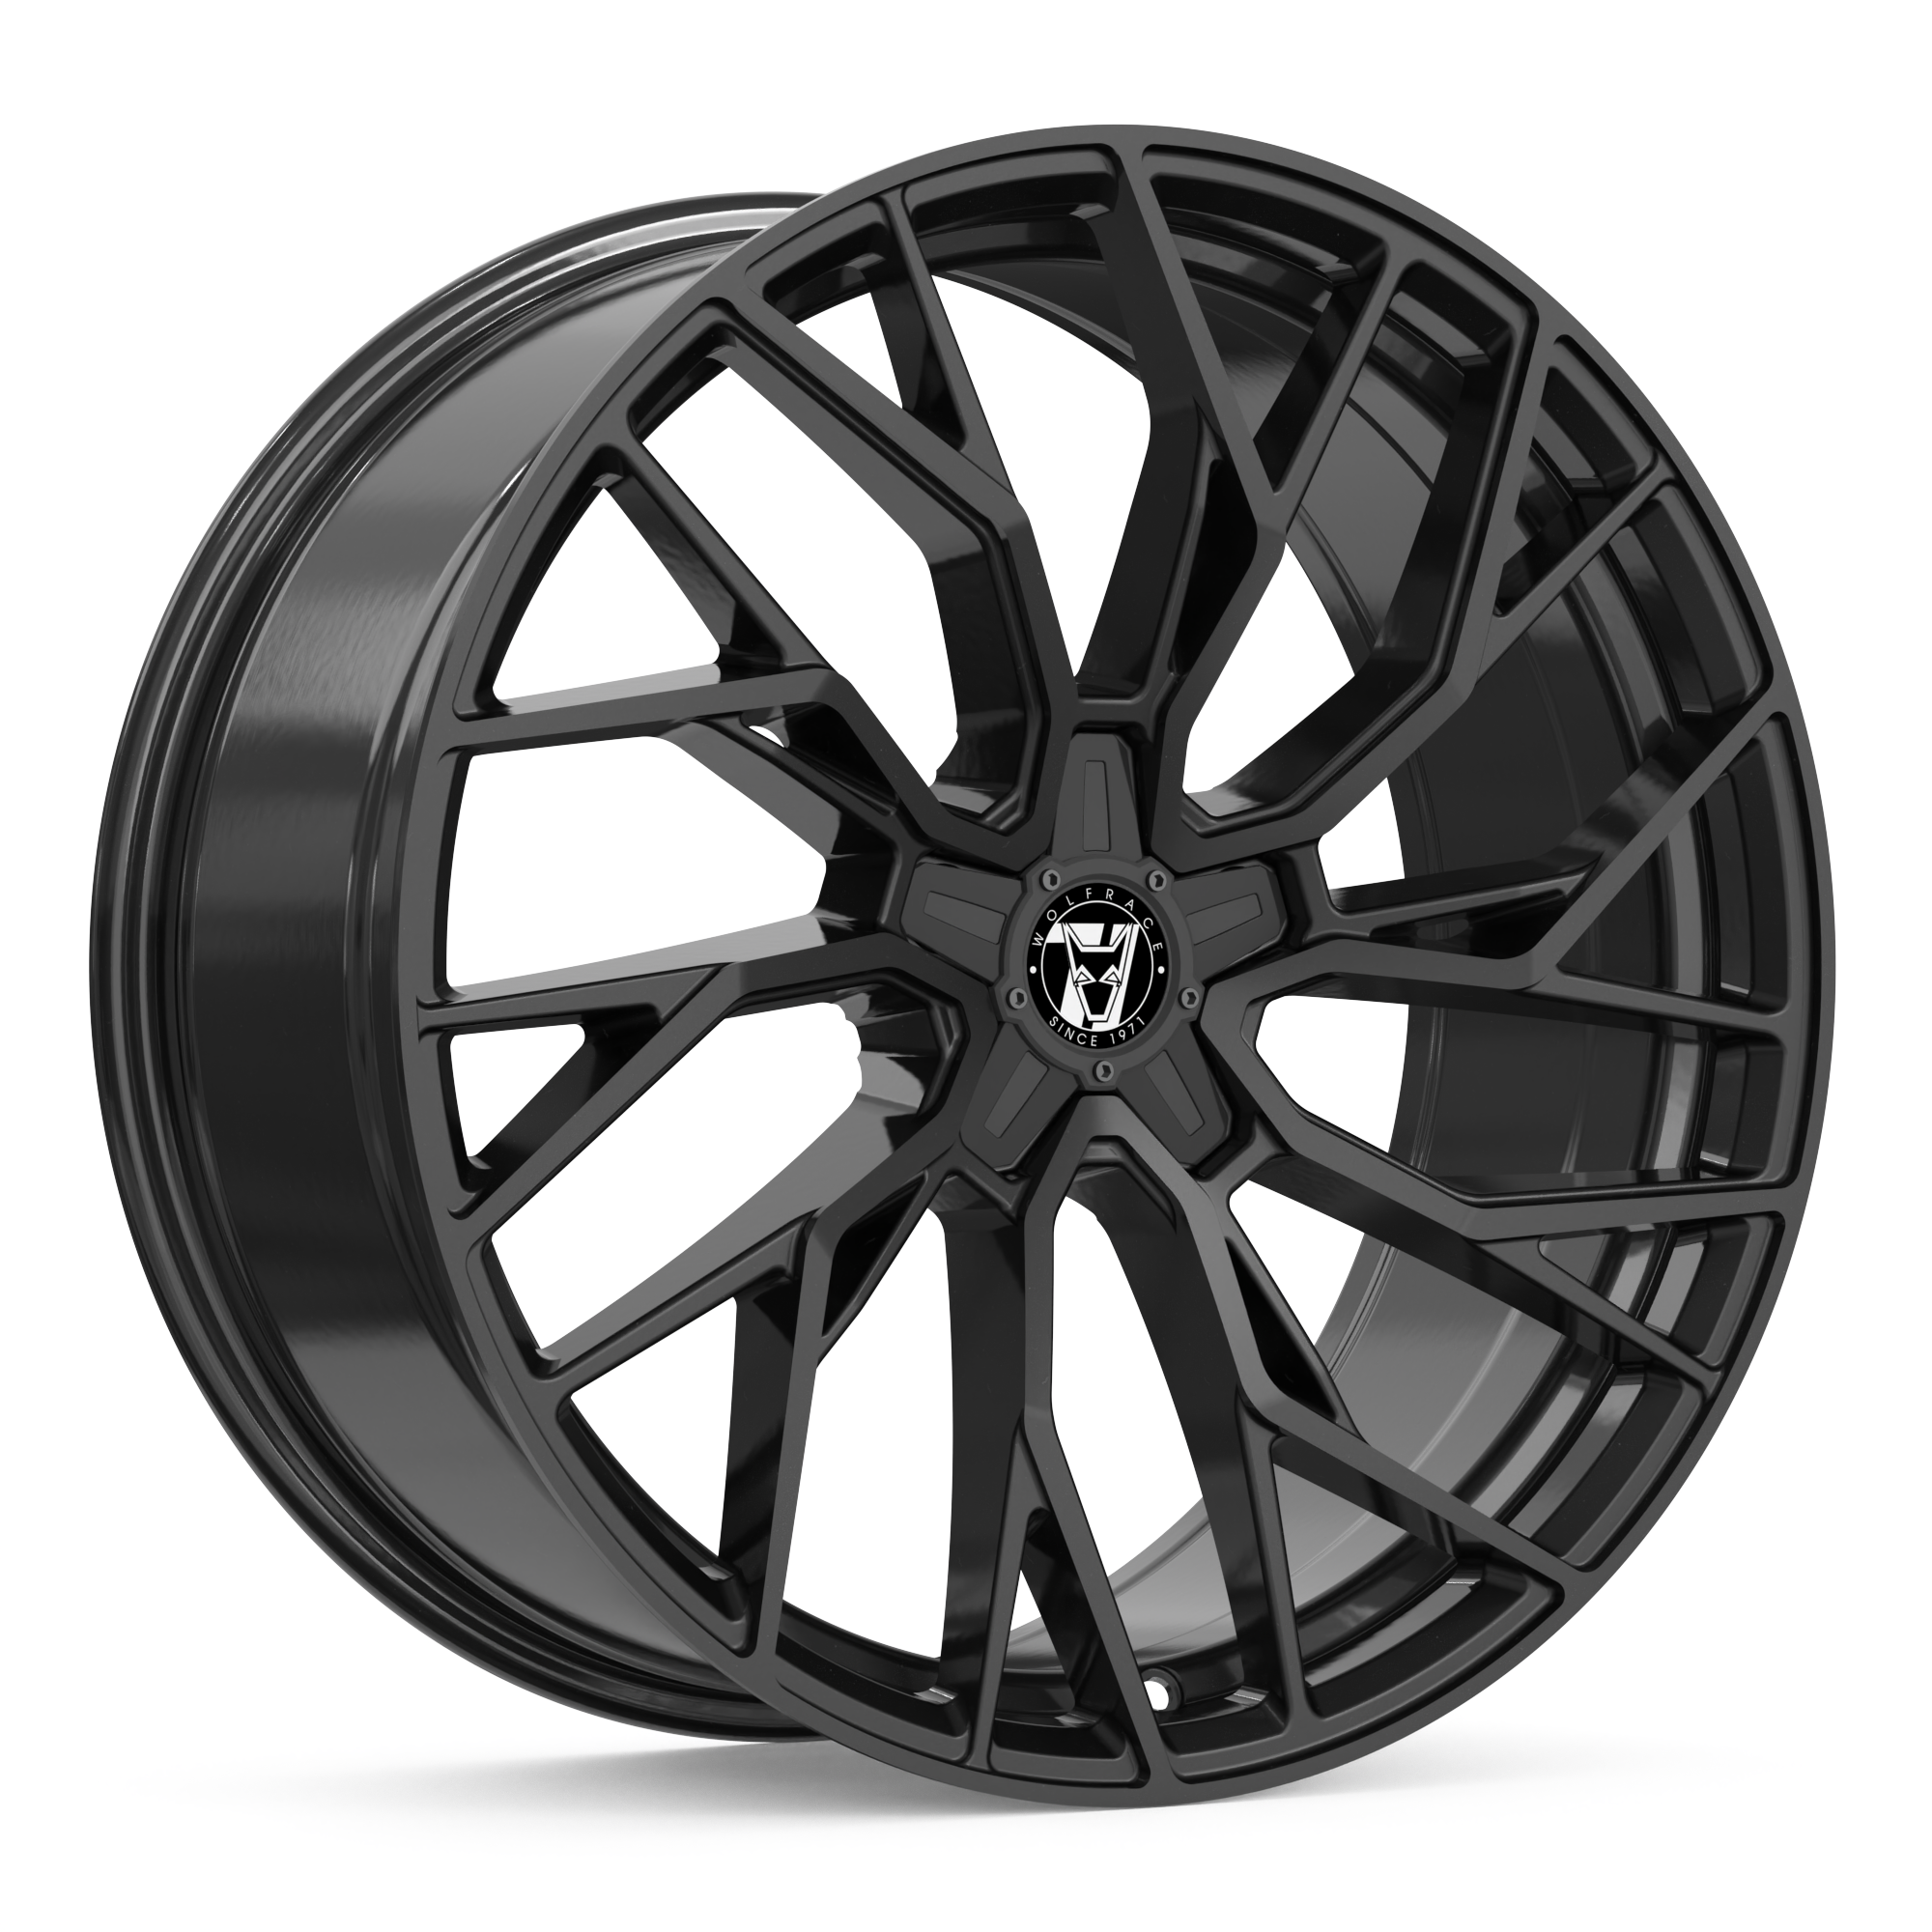 Demon Wheels 71 Voodoo Black Edition [9.5x22] -5x130- ET 38